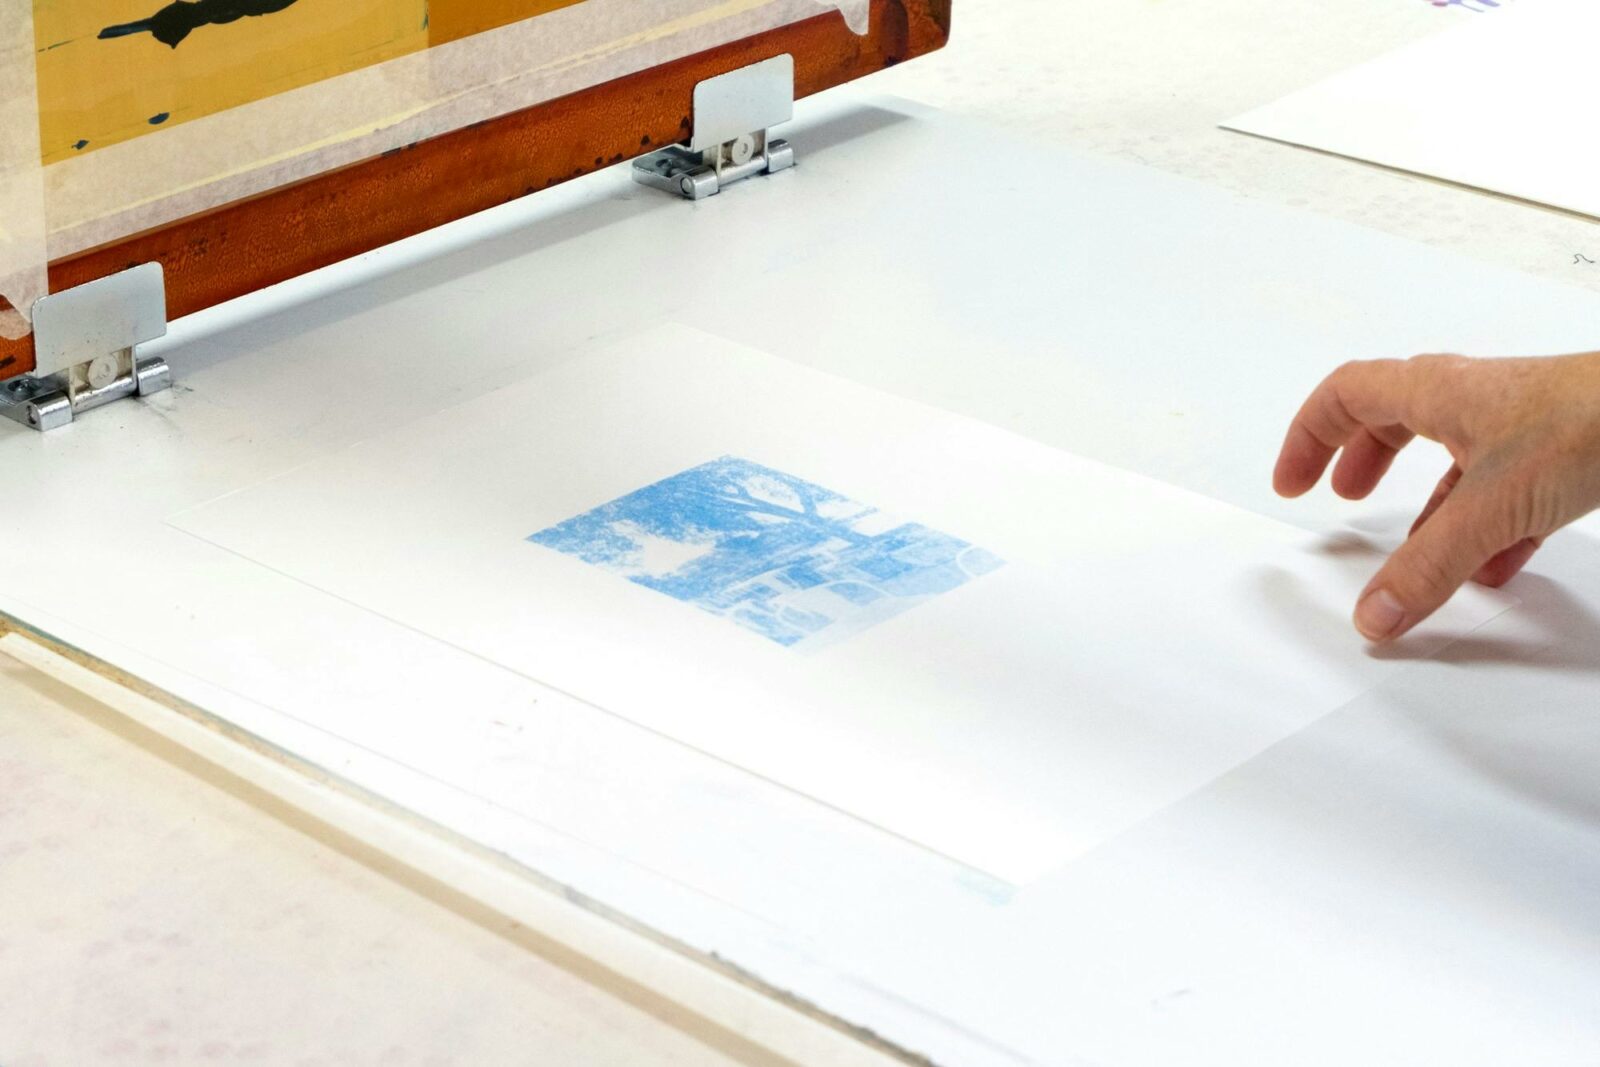 A photograph of a hand touching a screenprint